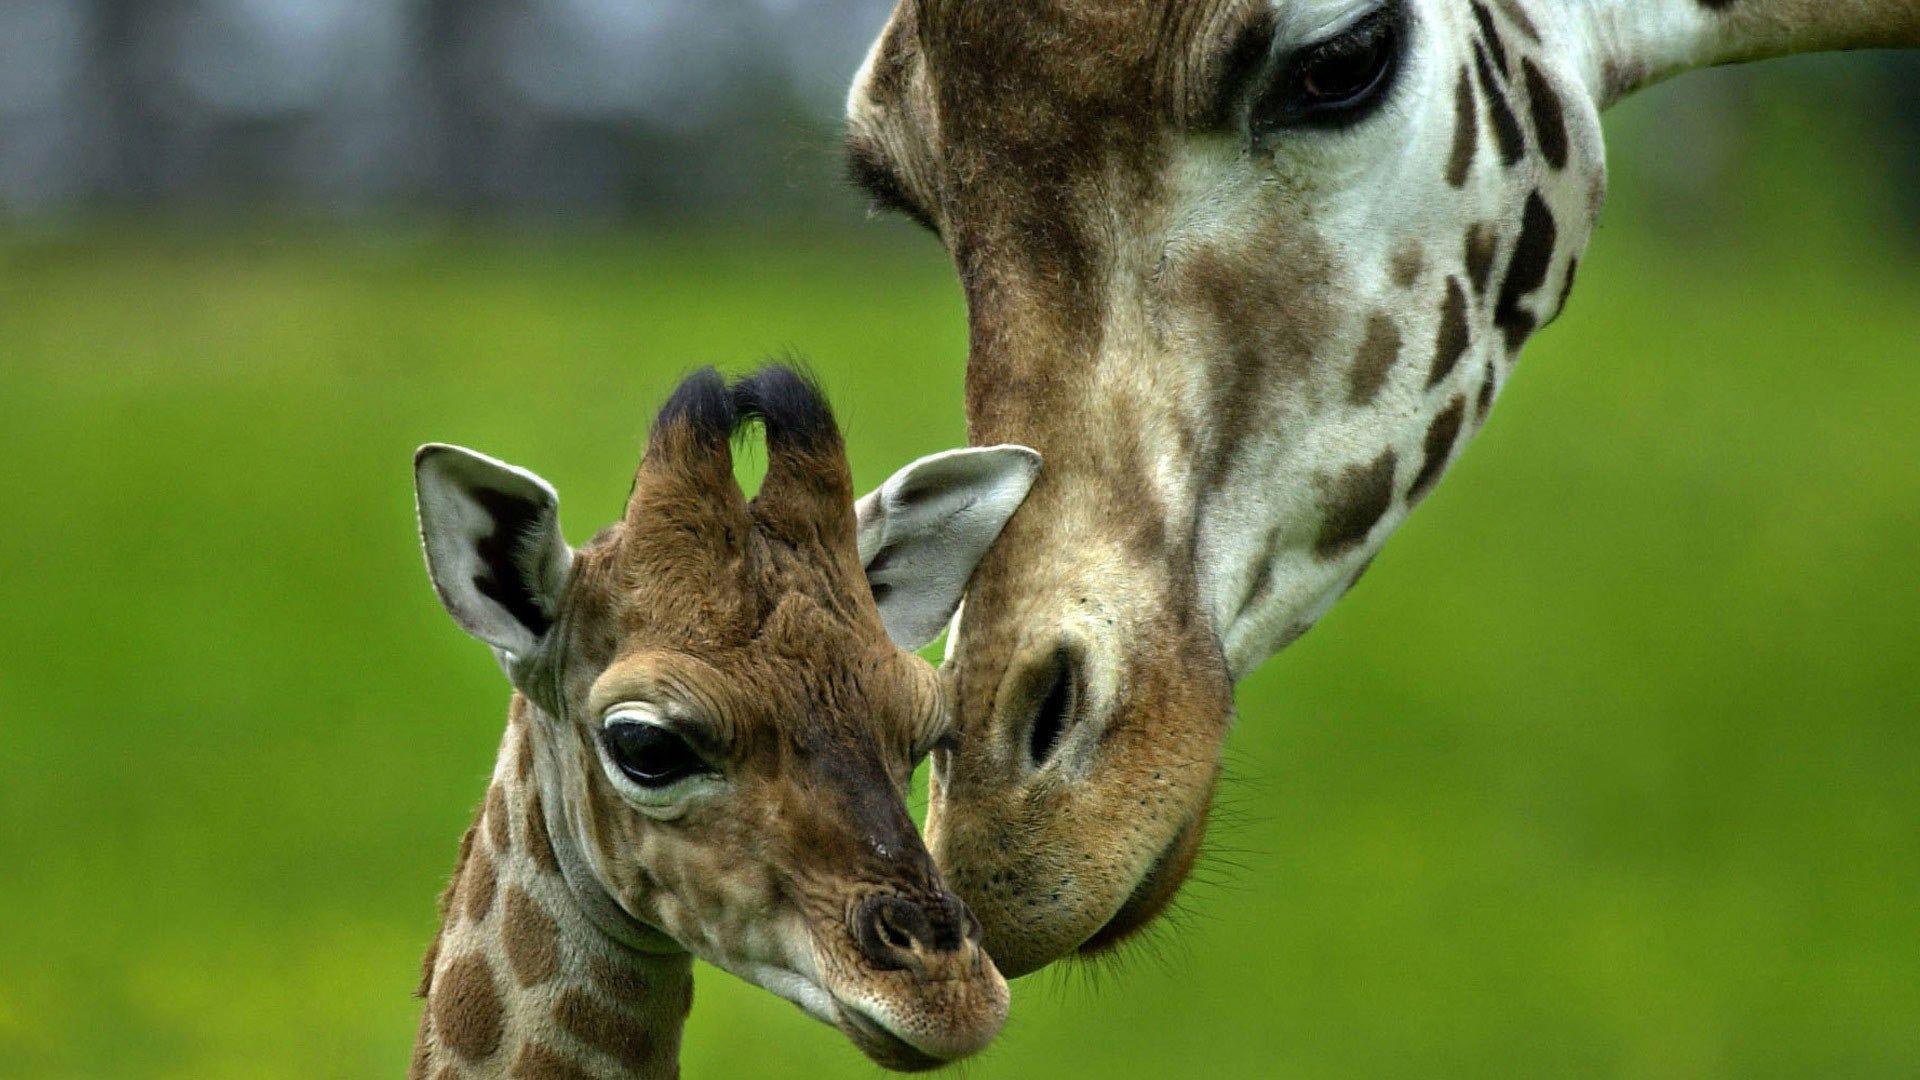 giraffe screensavers and background free. Giraffe picture, Baby